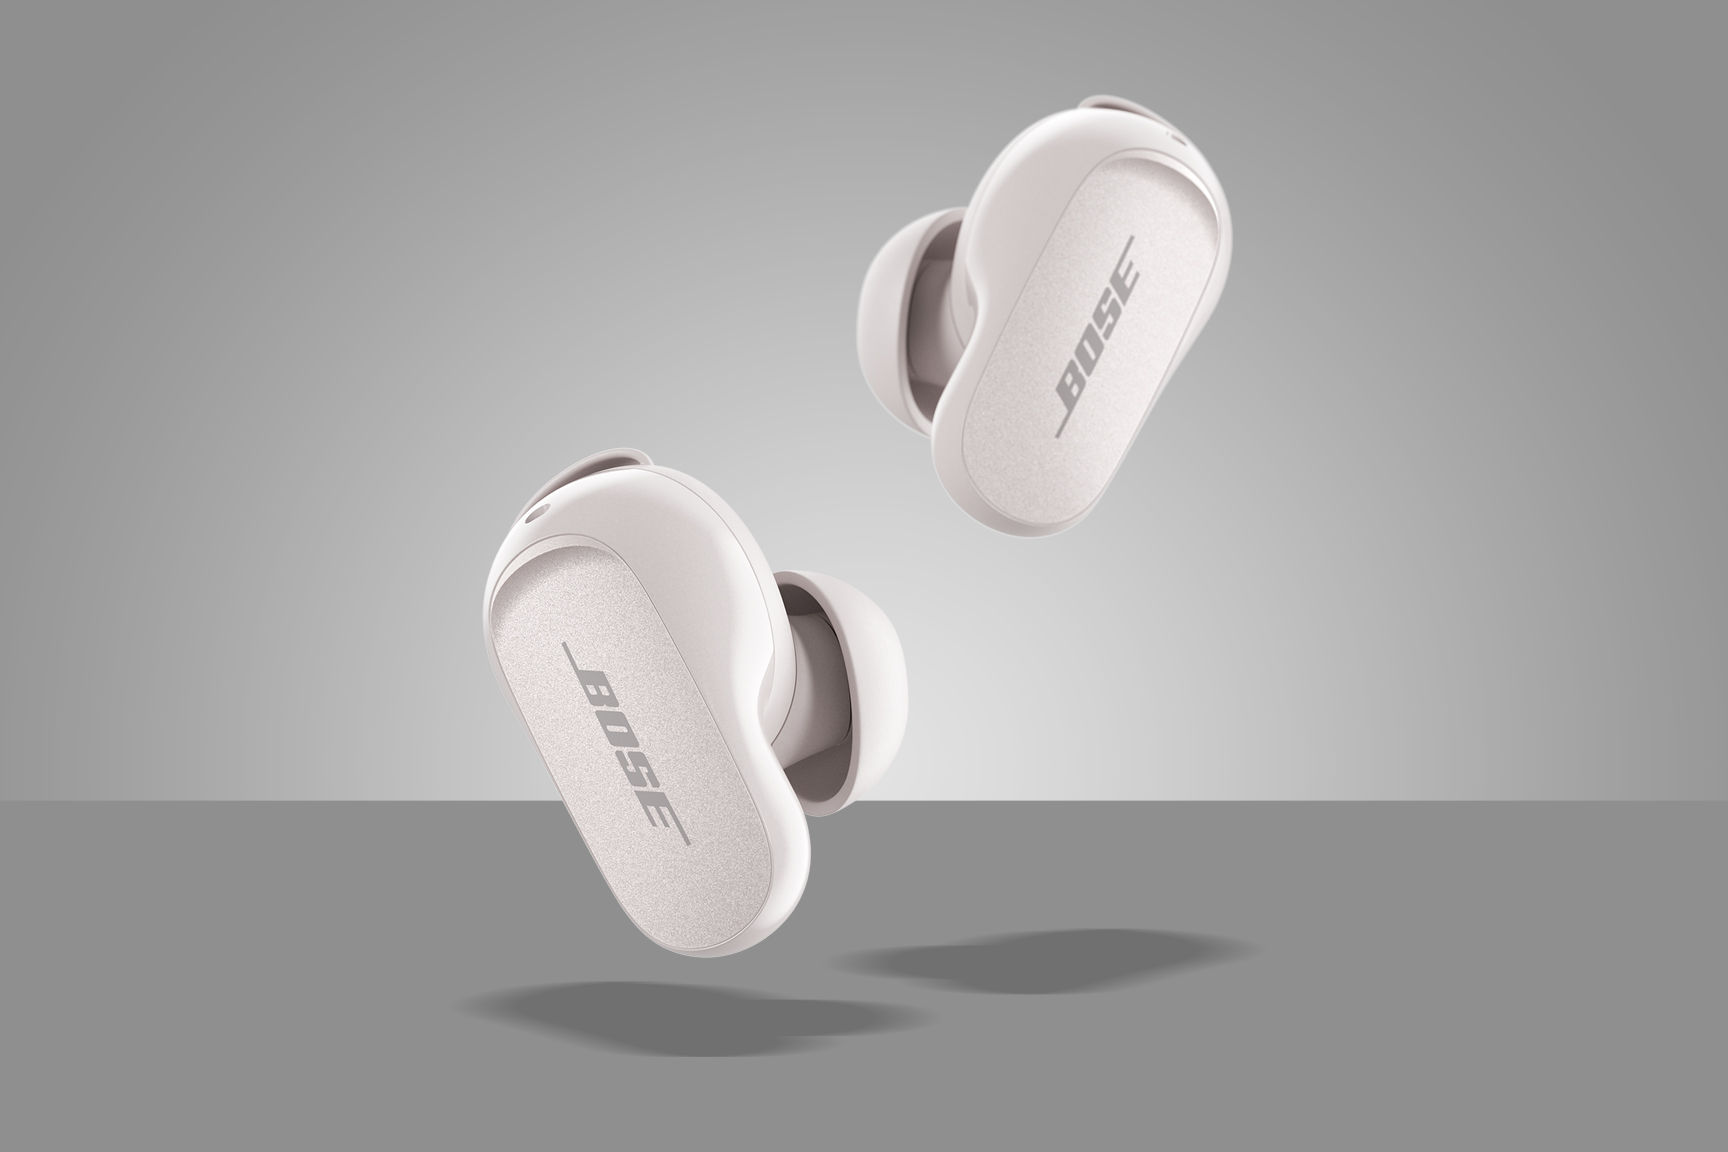 Bose QuietComfort Earbuds II promise custom-calibrated ANC | Stuff